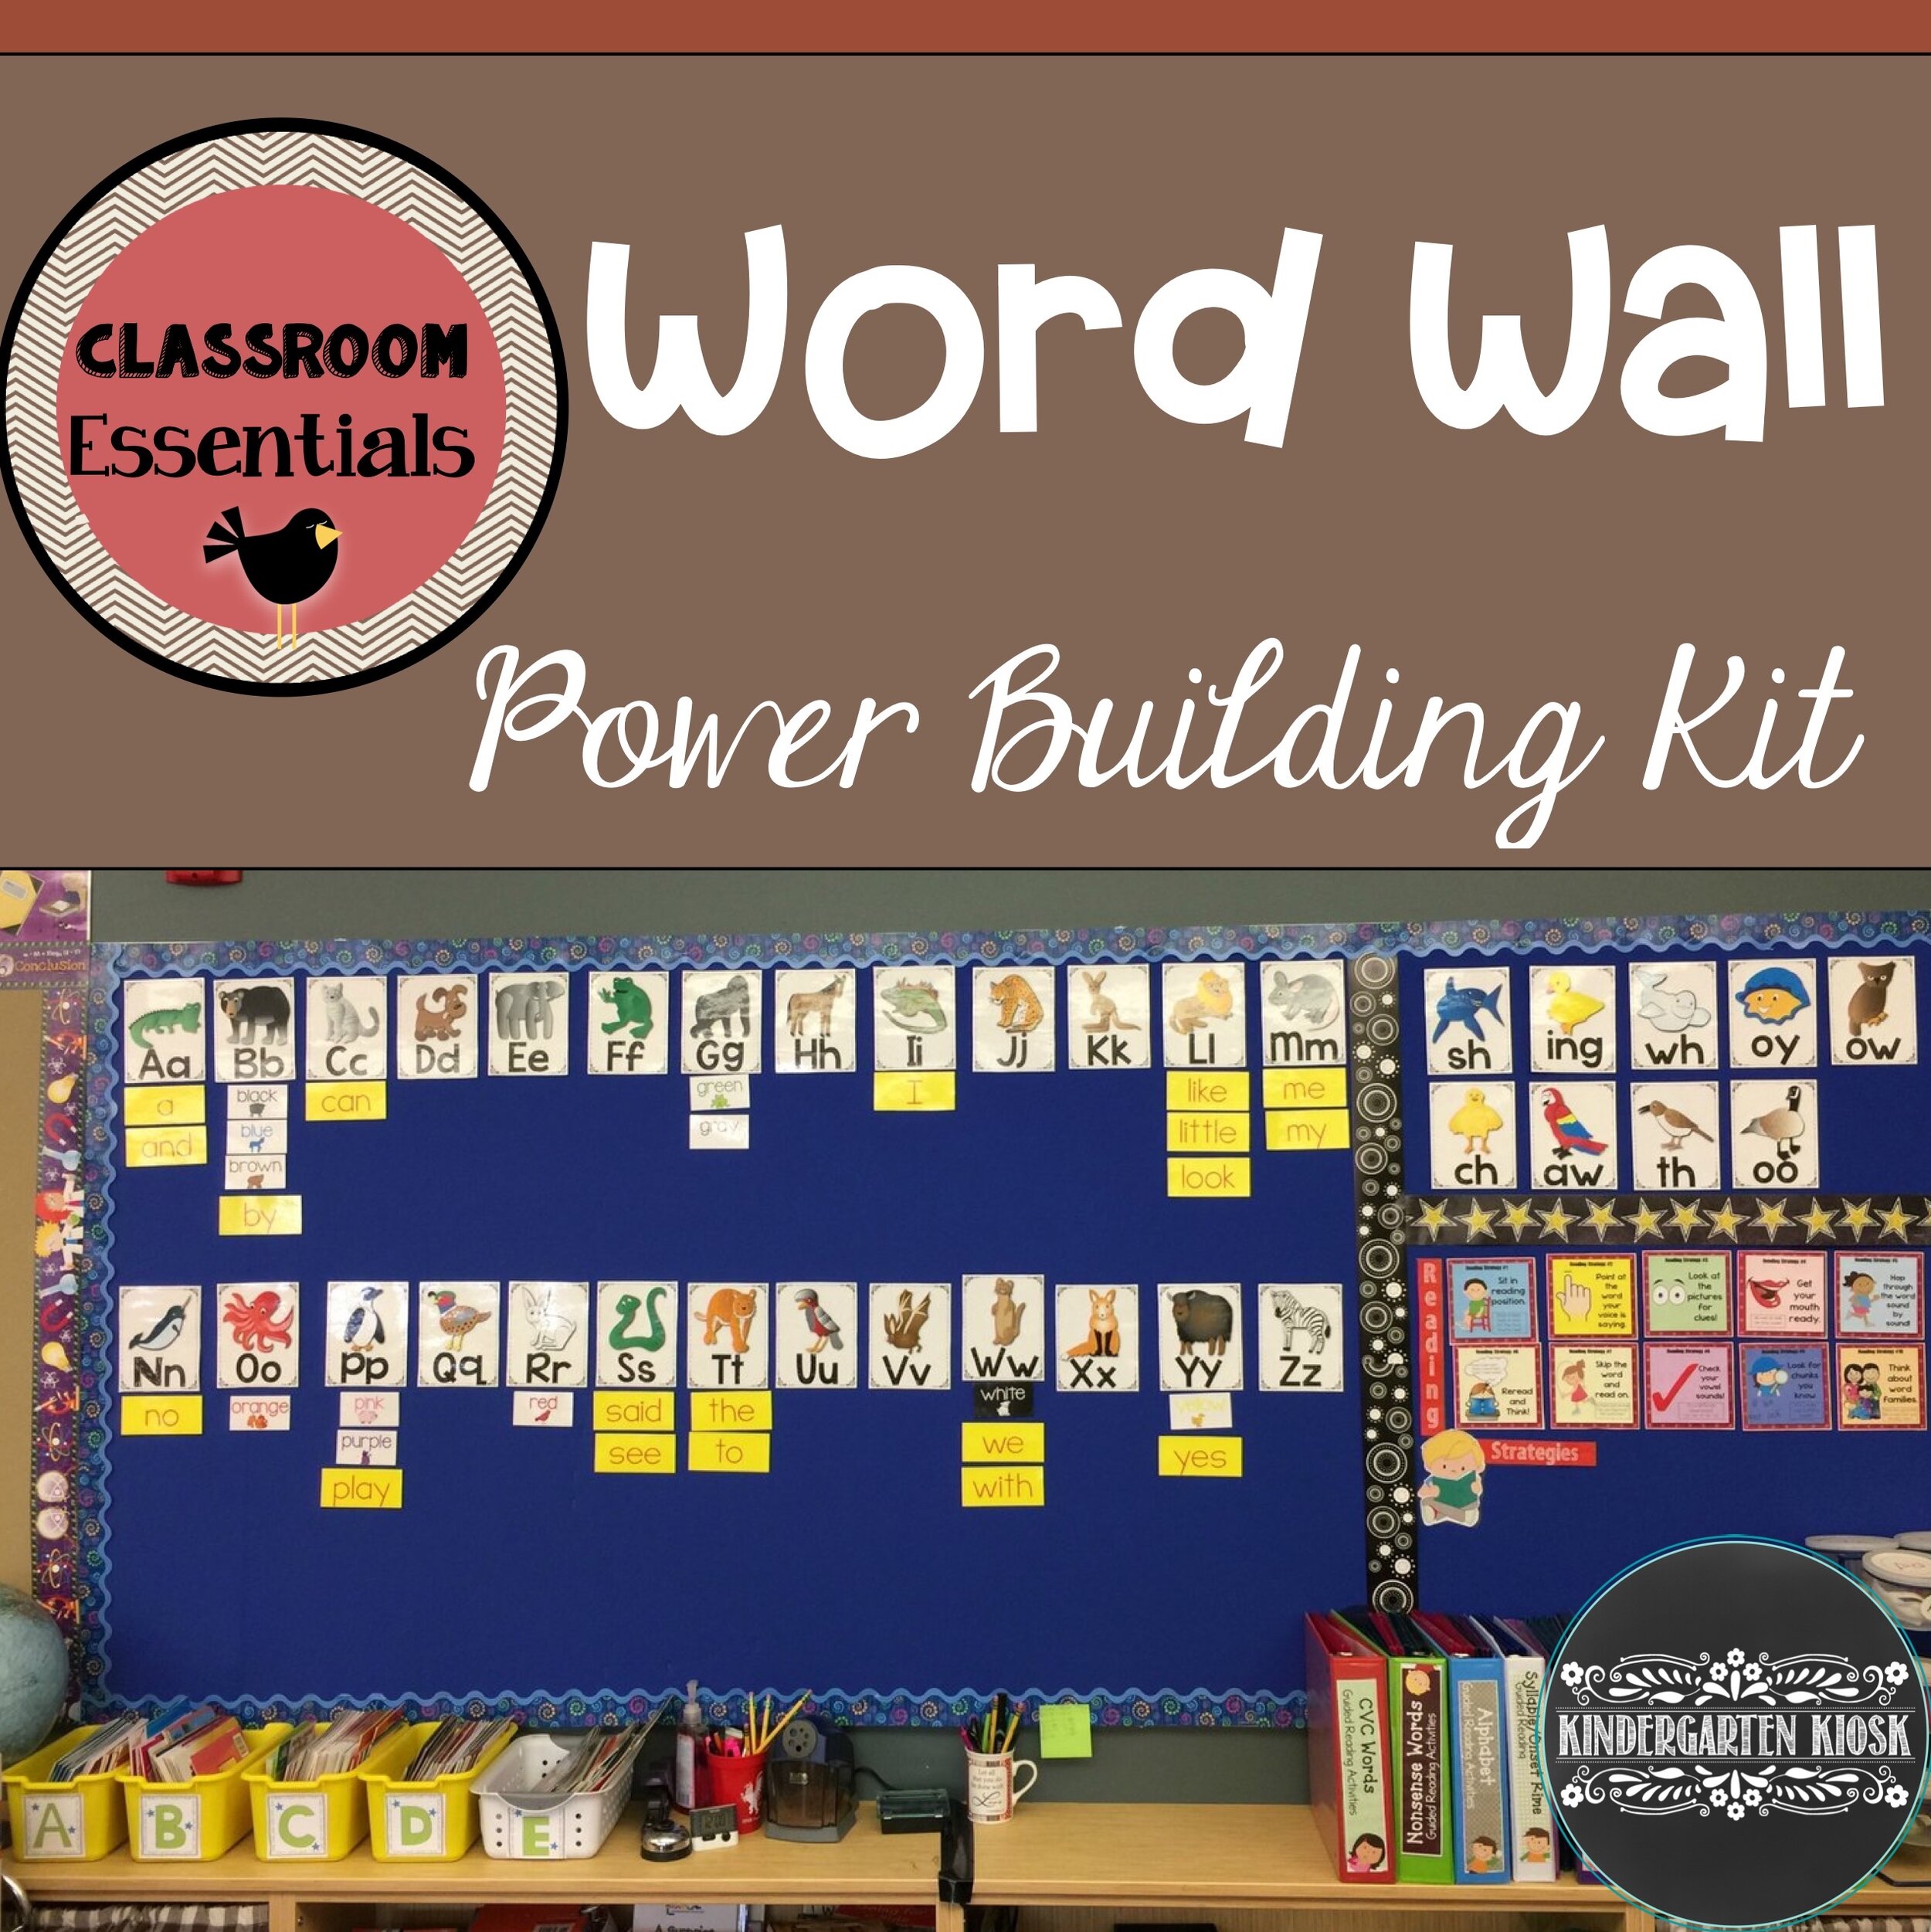 setting-up-a-great-word-wall-kindergarten-kiosk